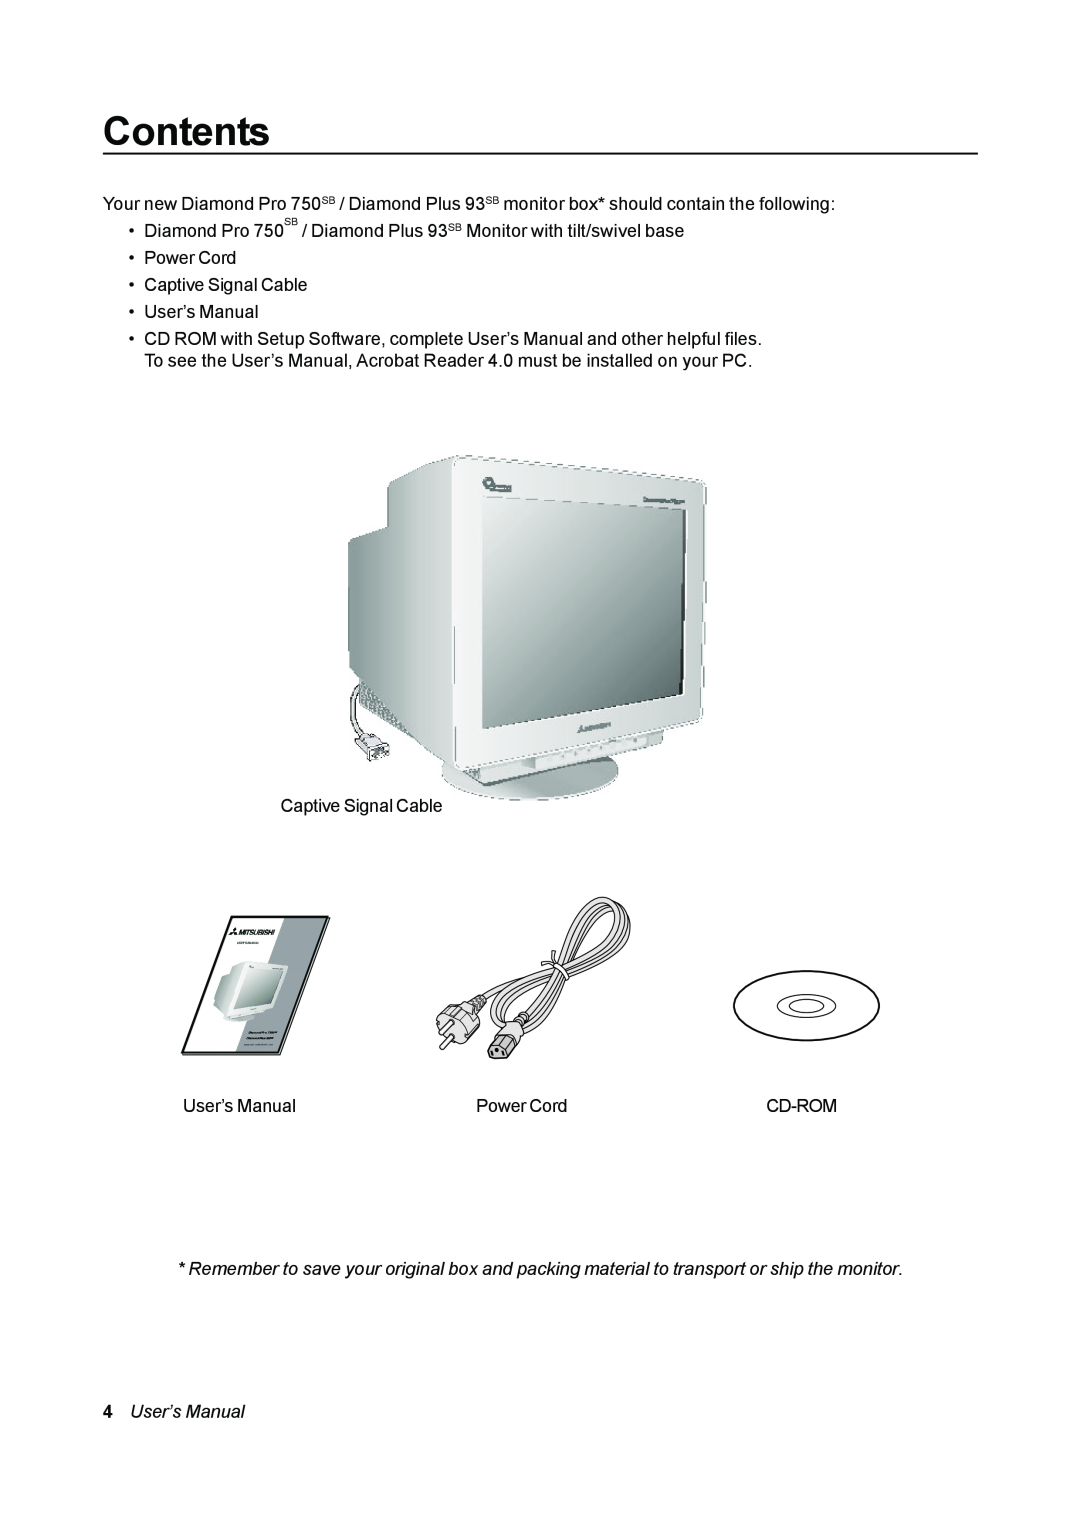 Mitsubishi Electronics 93 SB, 750 SB, Diamond Pro 750SB, Diamond Plus 93SB user manual Contents, User’s Manual 